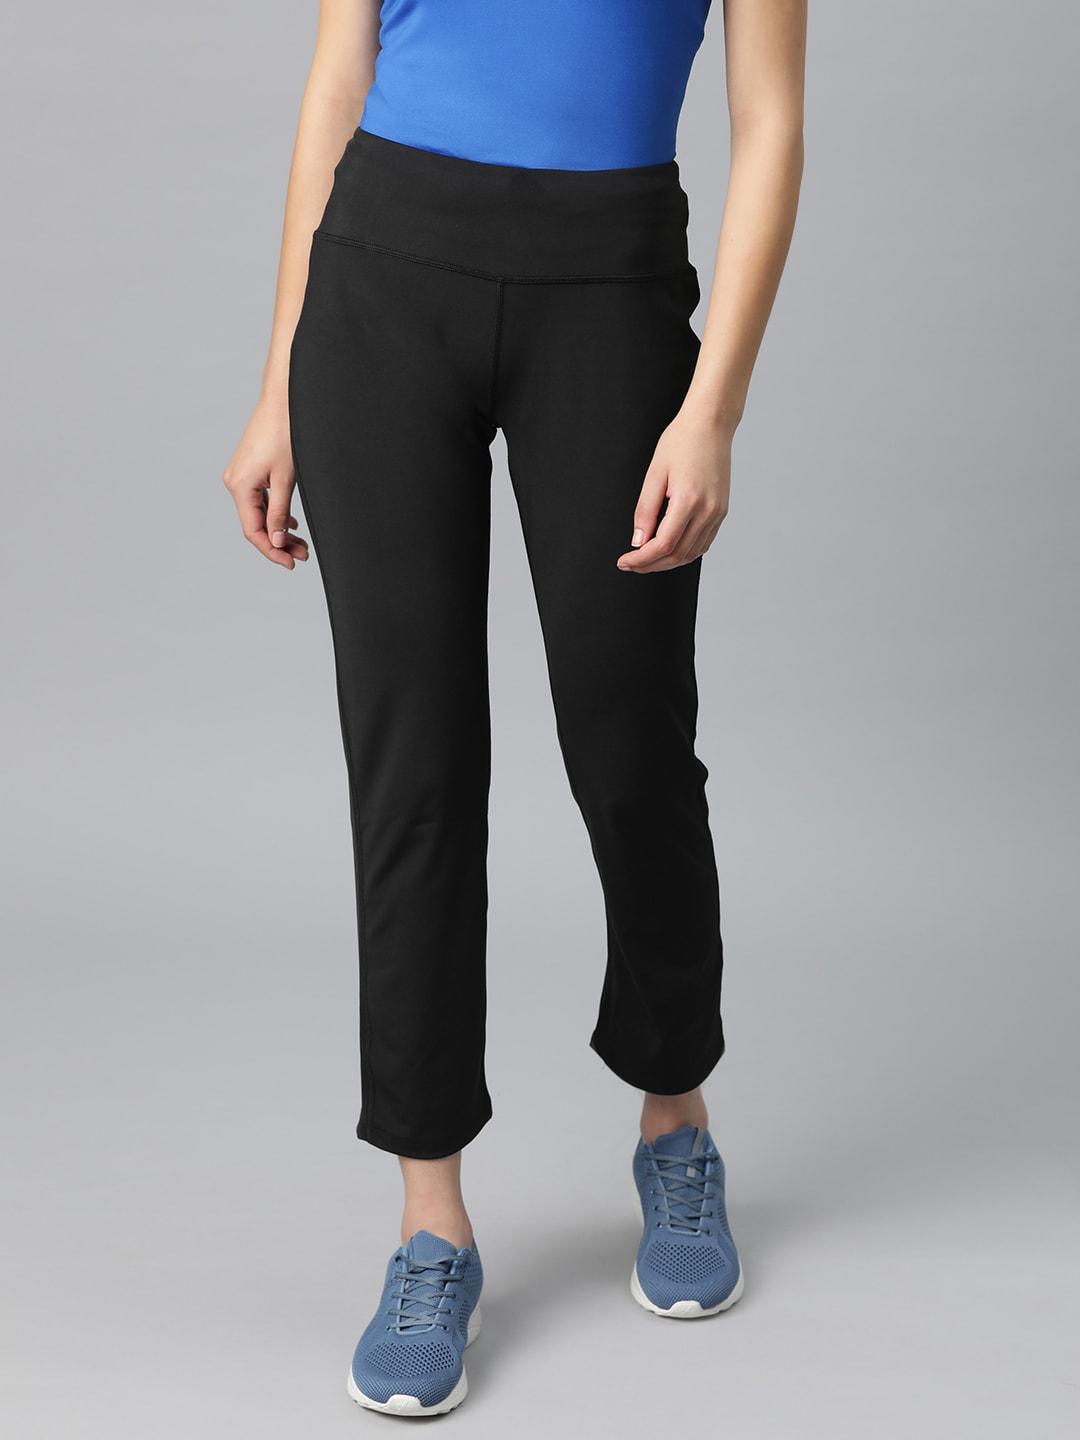 alcis-women-solid-black-track-pants